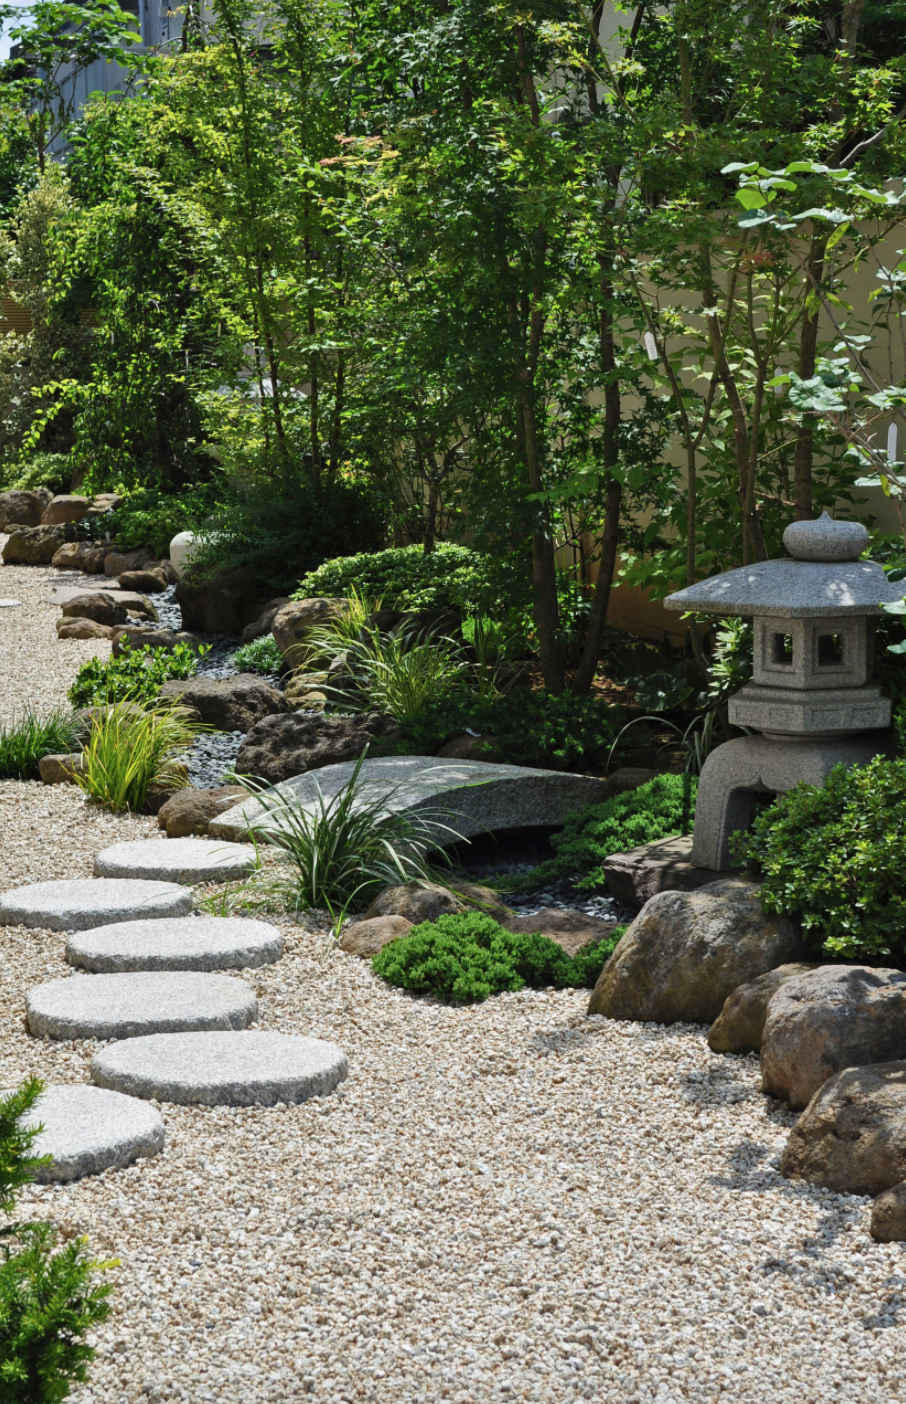 Designing a Japanese Zen stone garden
